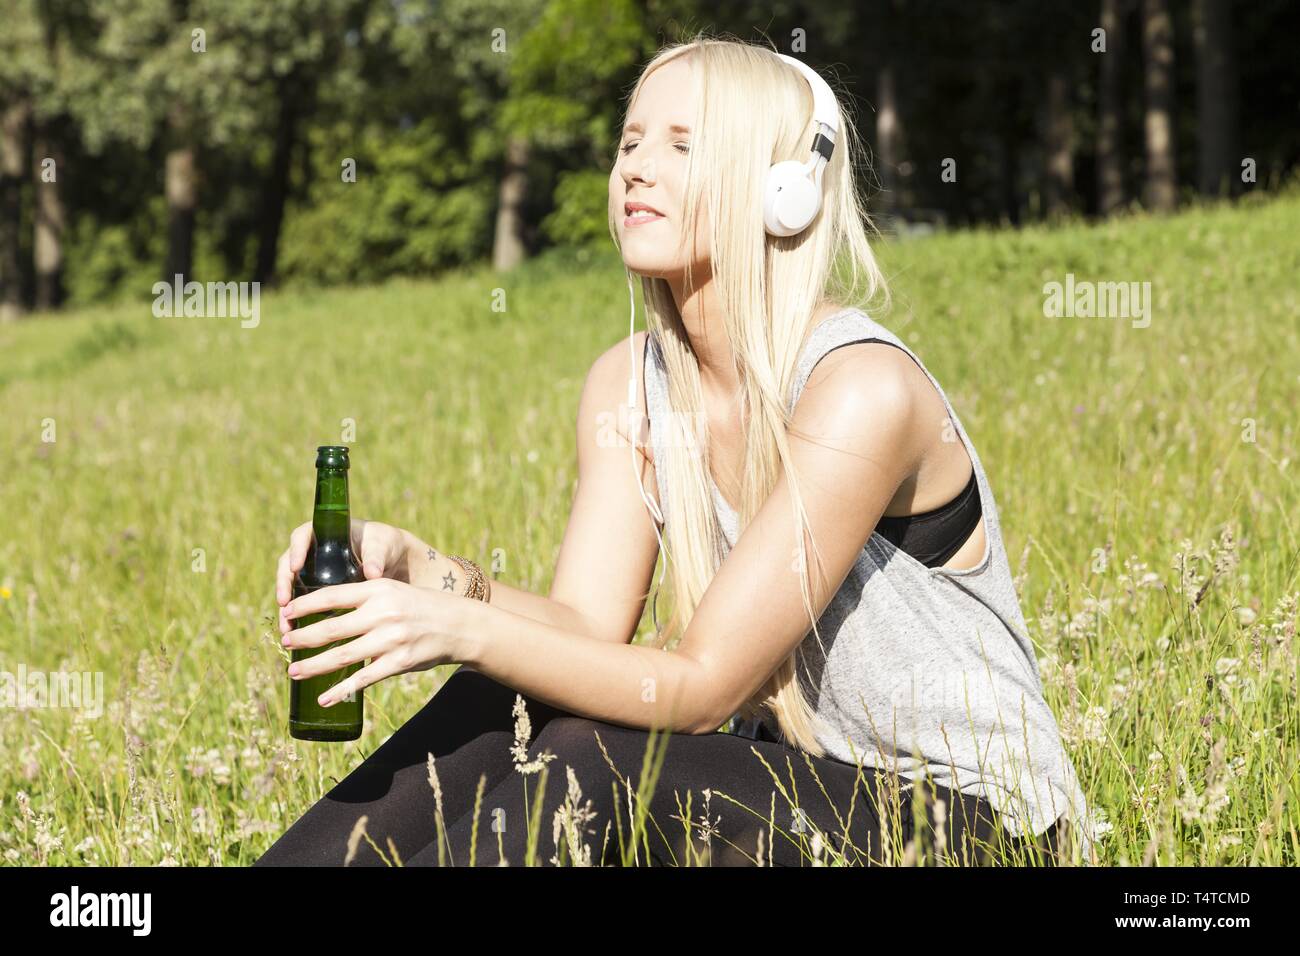 Teen with beer bottle and headphones Stock Photo